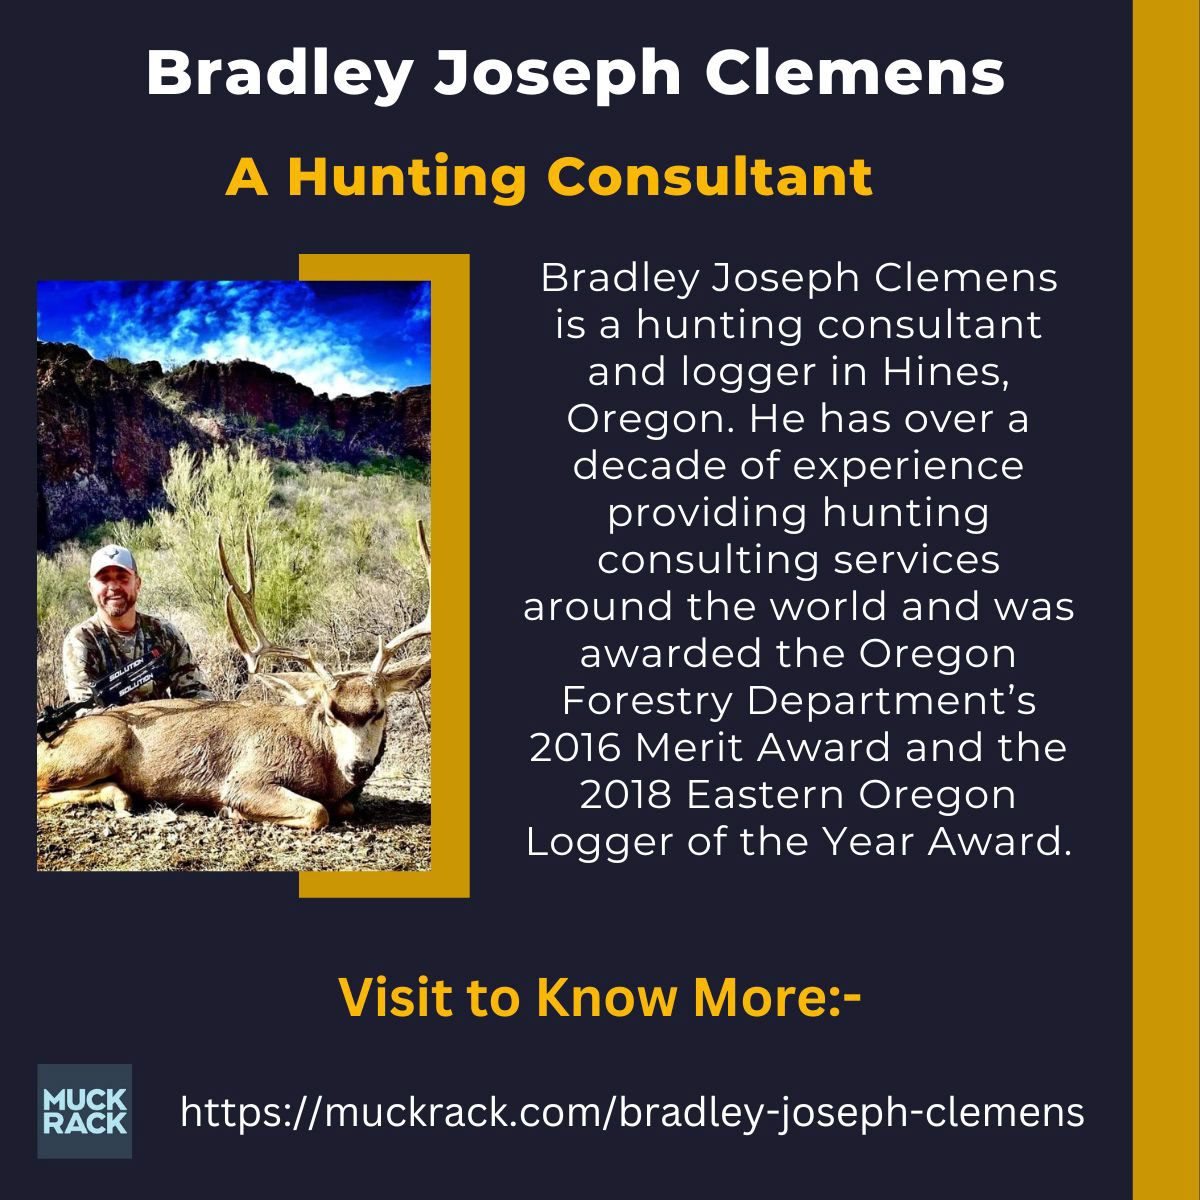 Bradley Joseph Clemens